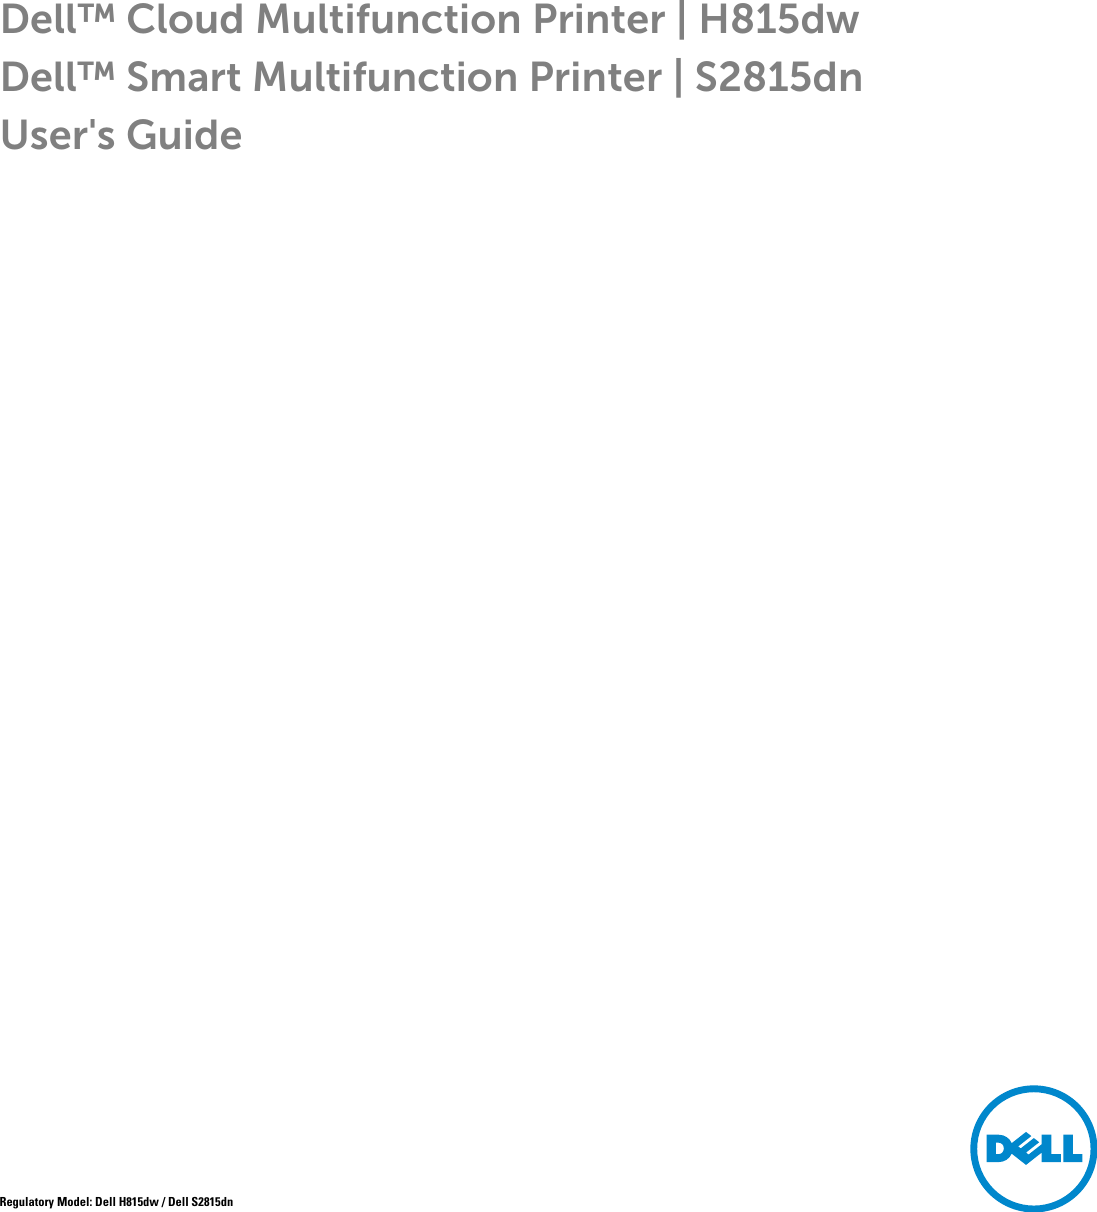 Dell™ Cloud Multifunction Printer | H815dwDell™ Smart Multifunction Printer | S2815dnUser&apos;s GuideRegulatory Model: Dell H815dw / Dell S2815dn